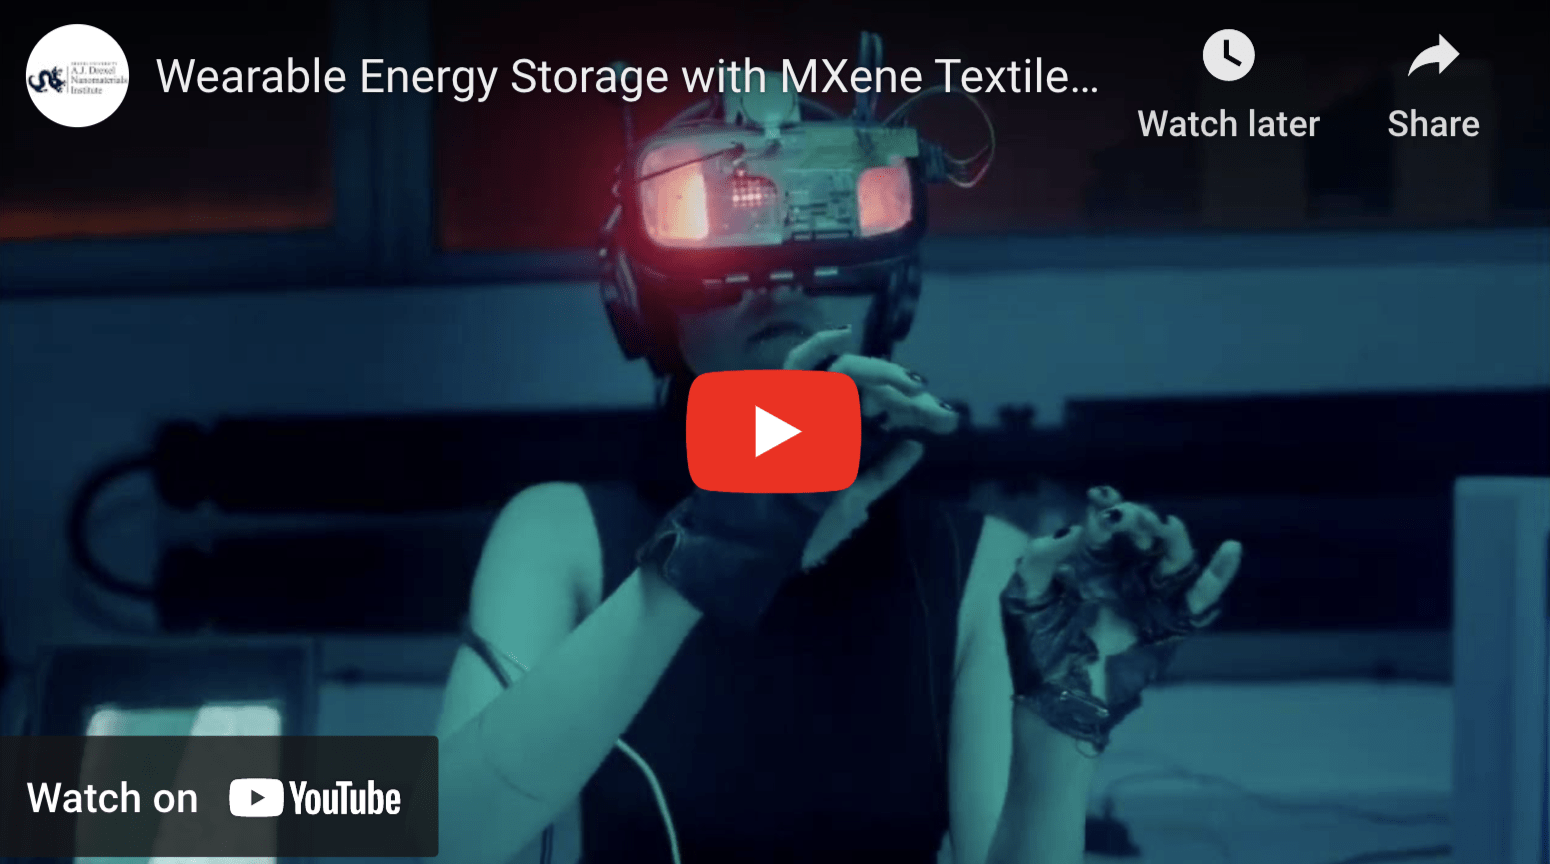 DNI and Accenture Make Video on MXene Textile Supercapacitors